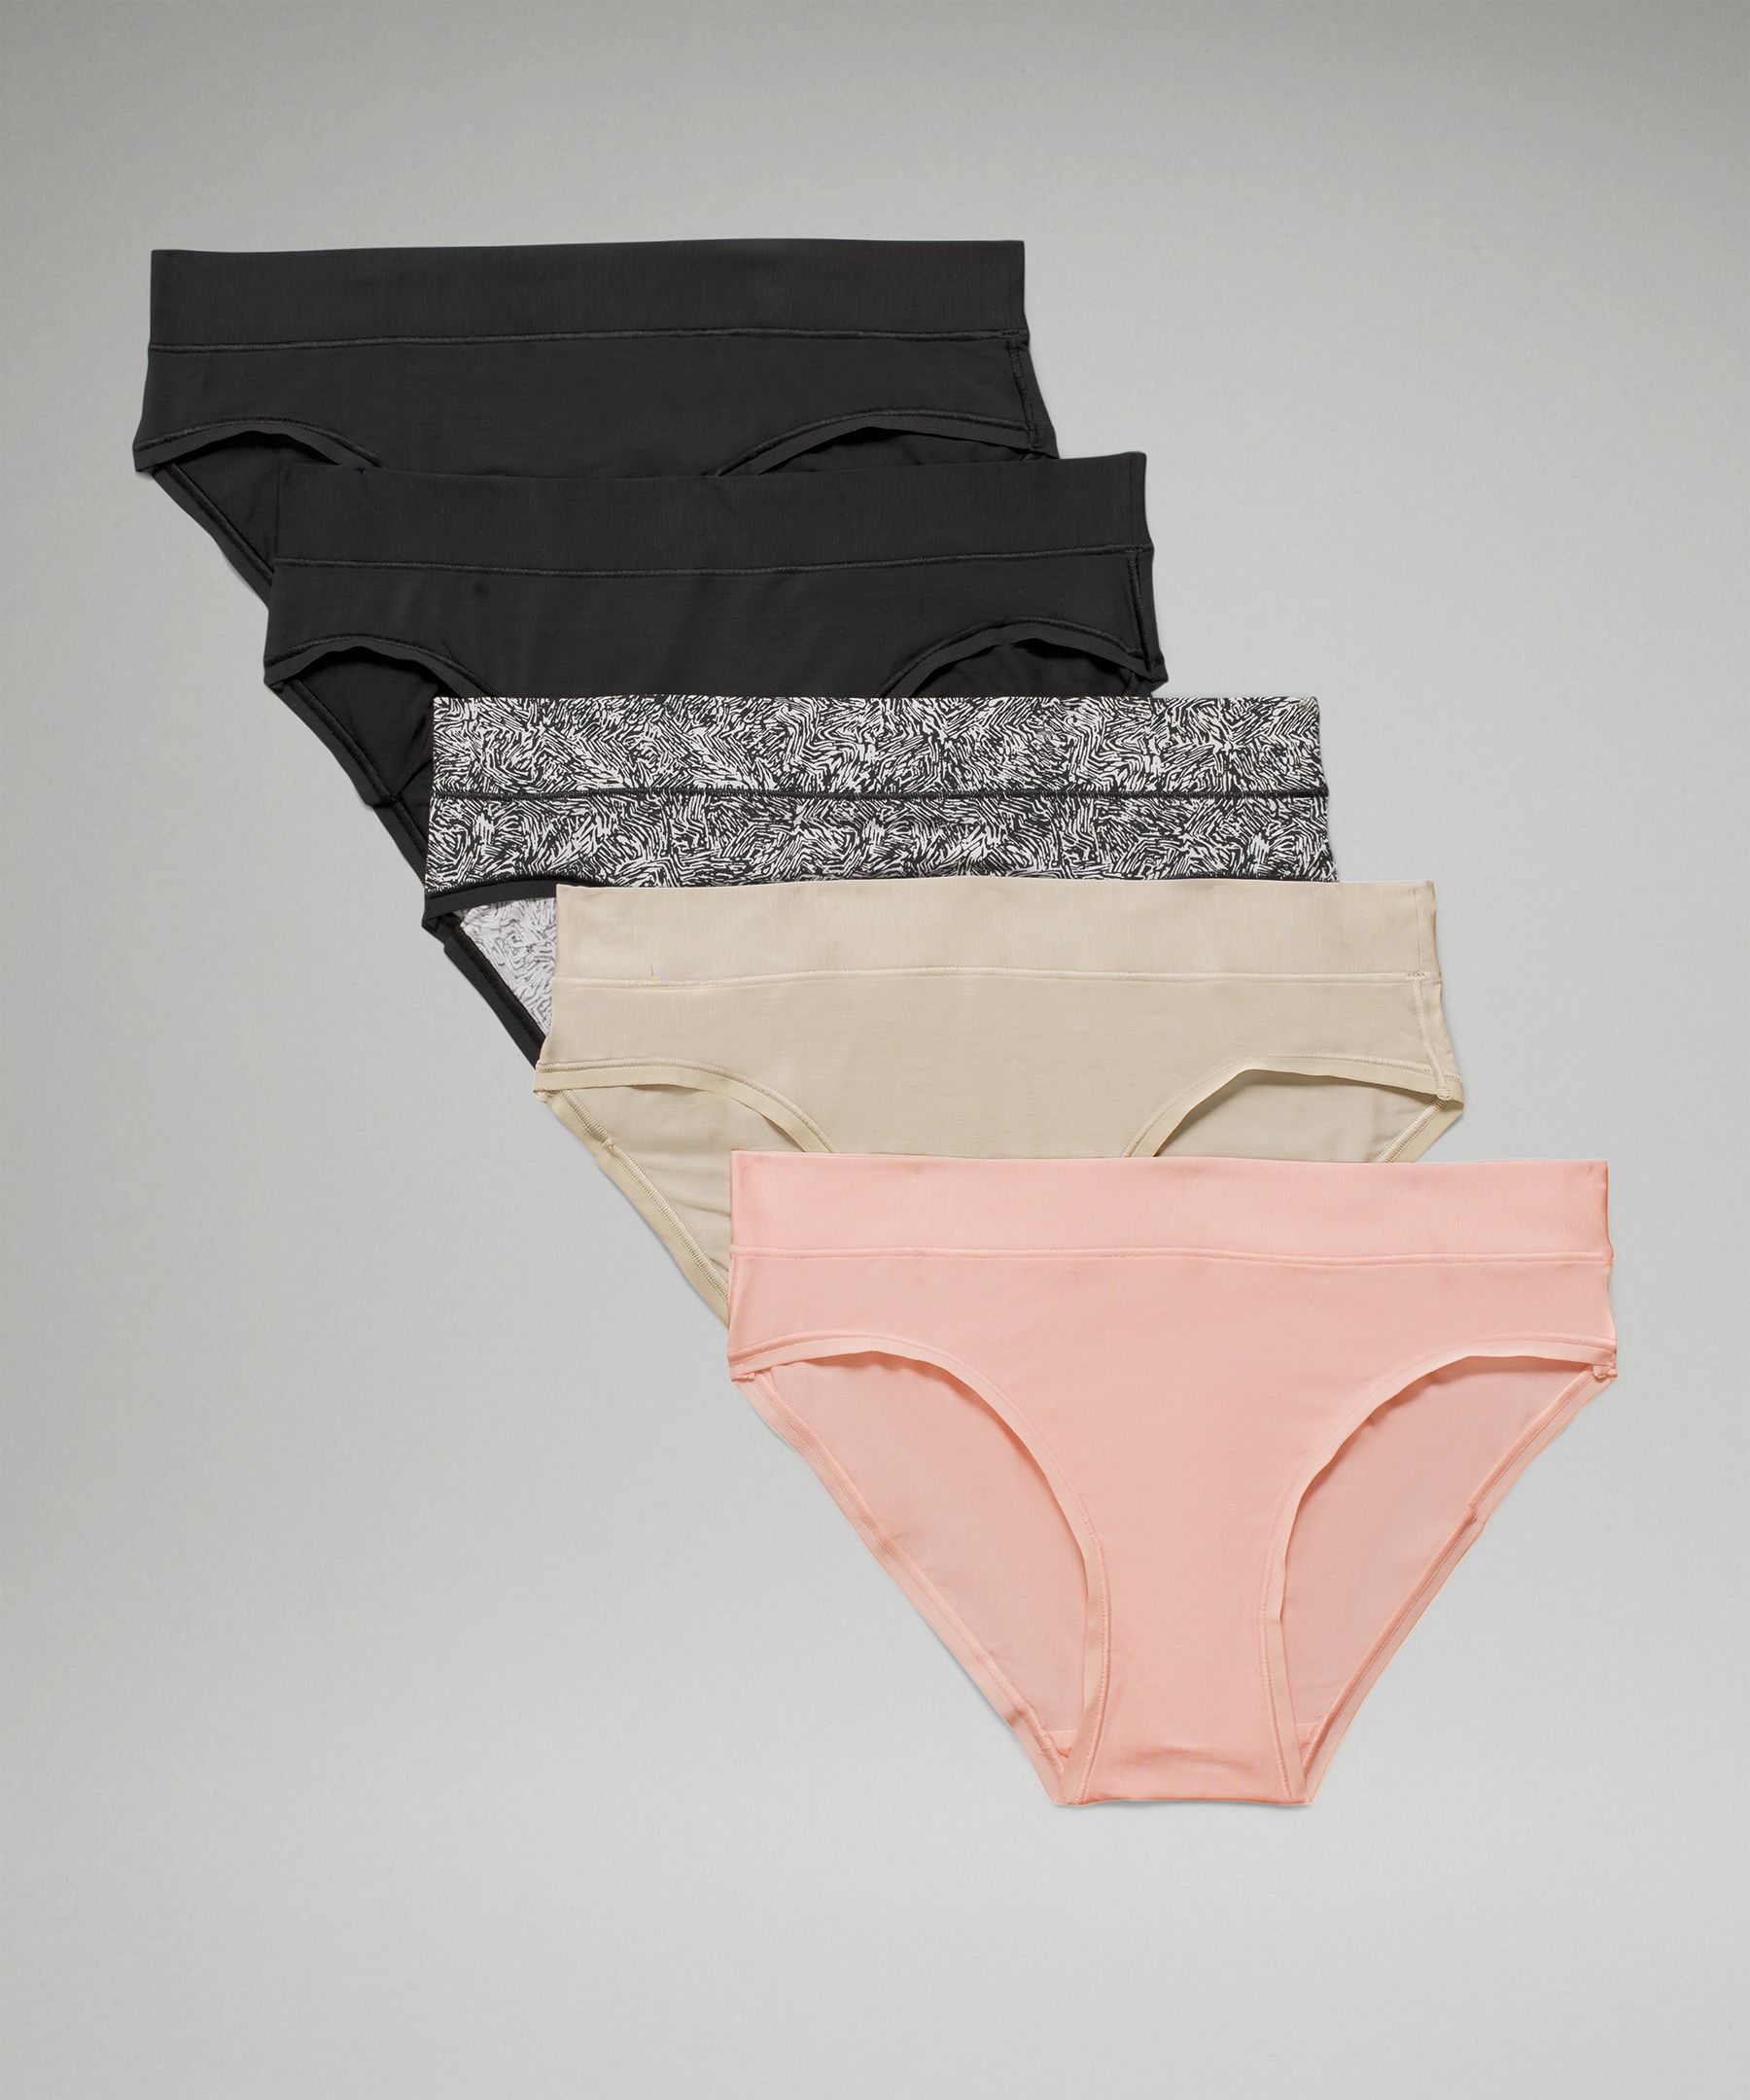 Lululemon Underease Mid-rise Bikini Underwear 5 Pack In Black/black/pink Mist